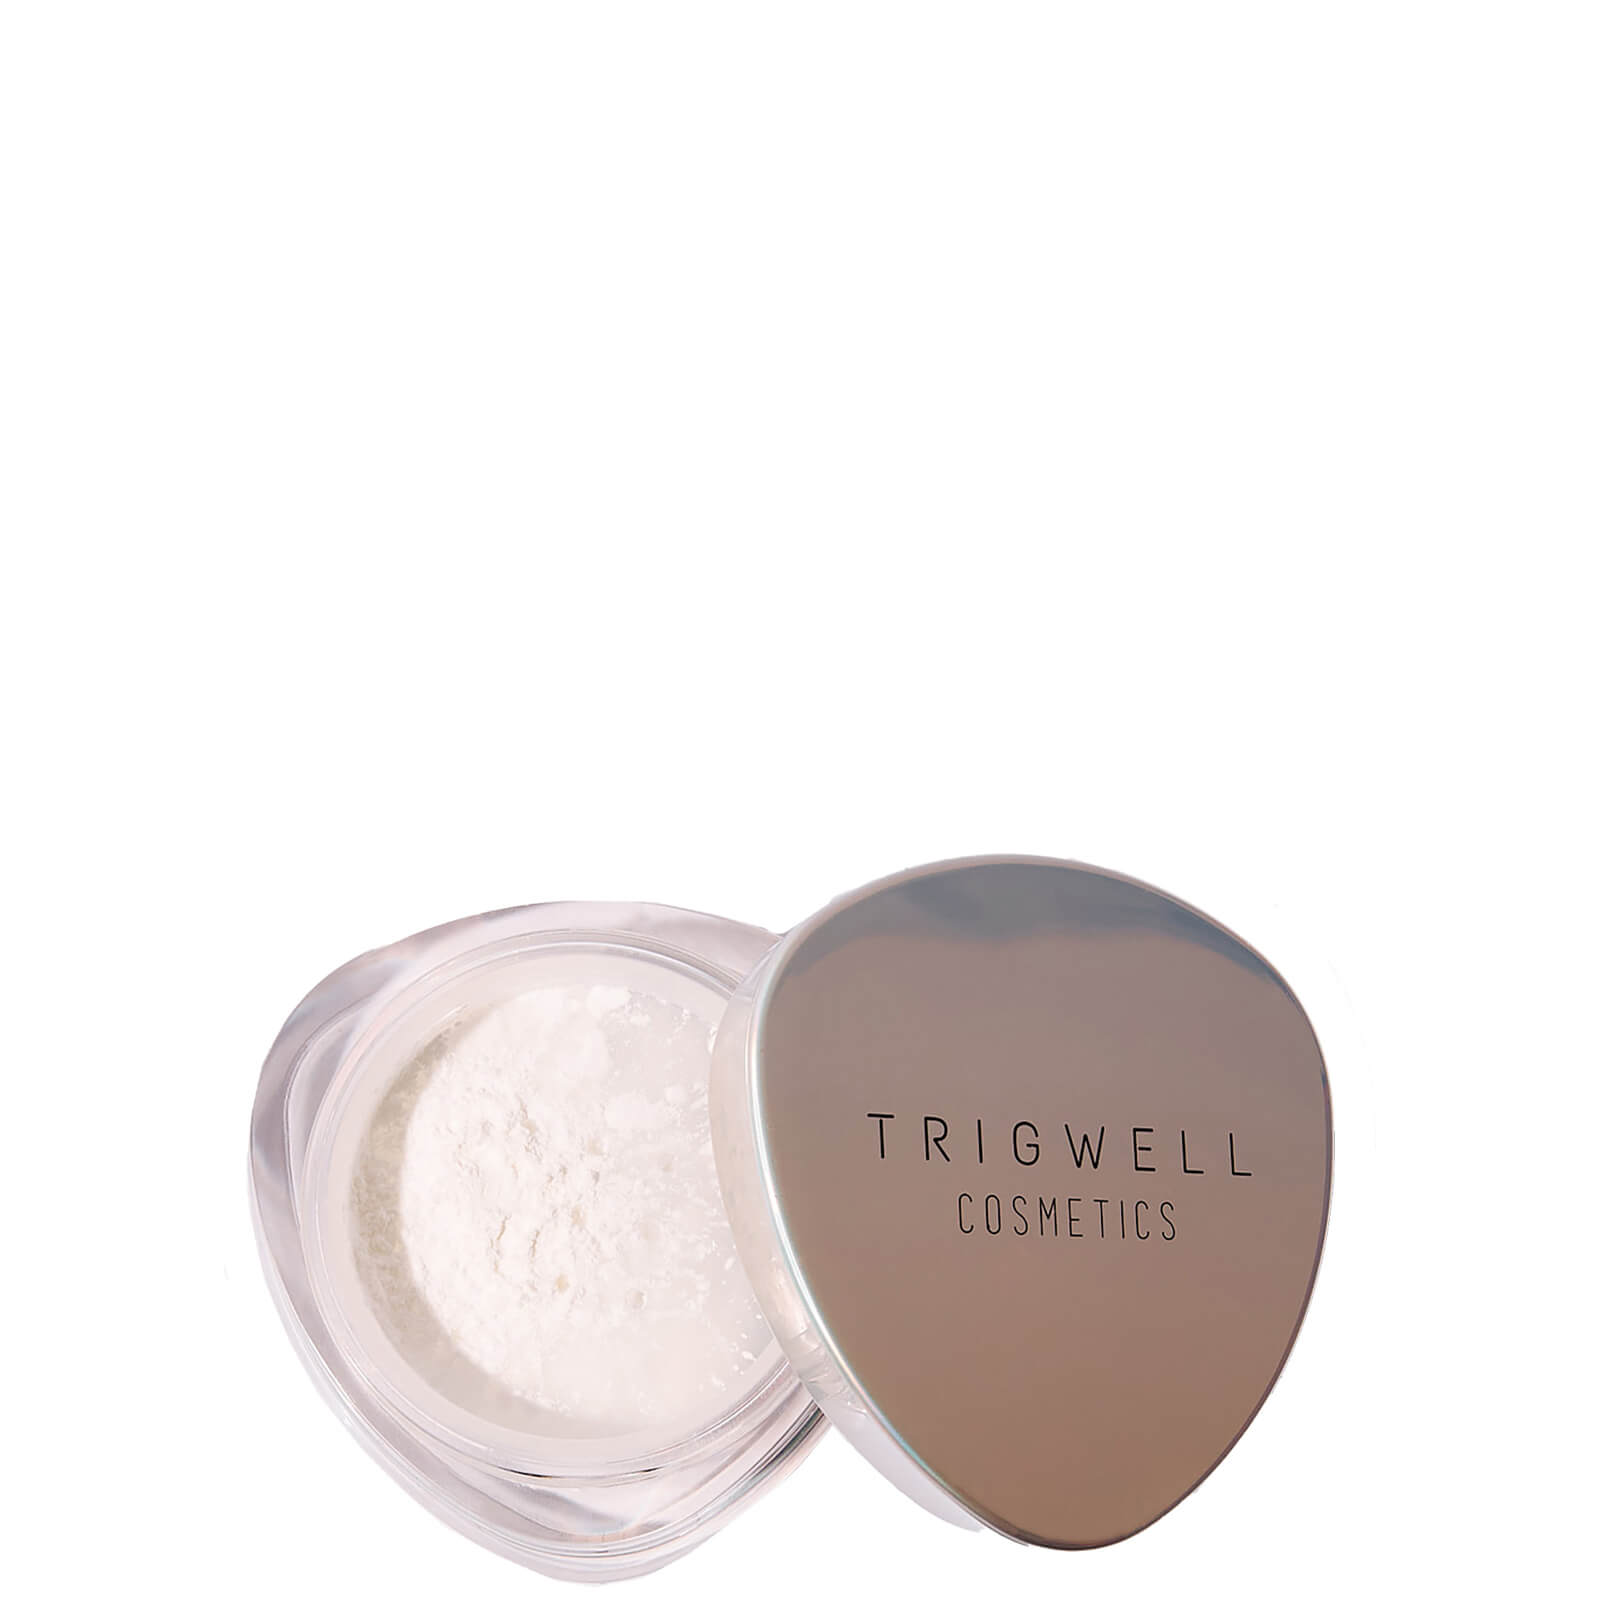 Trigwell Cosmetics Velvet Setting Powder 8g (various Shades) - Translucent In White